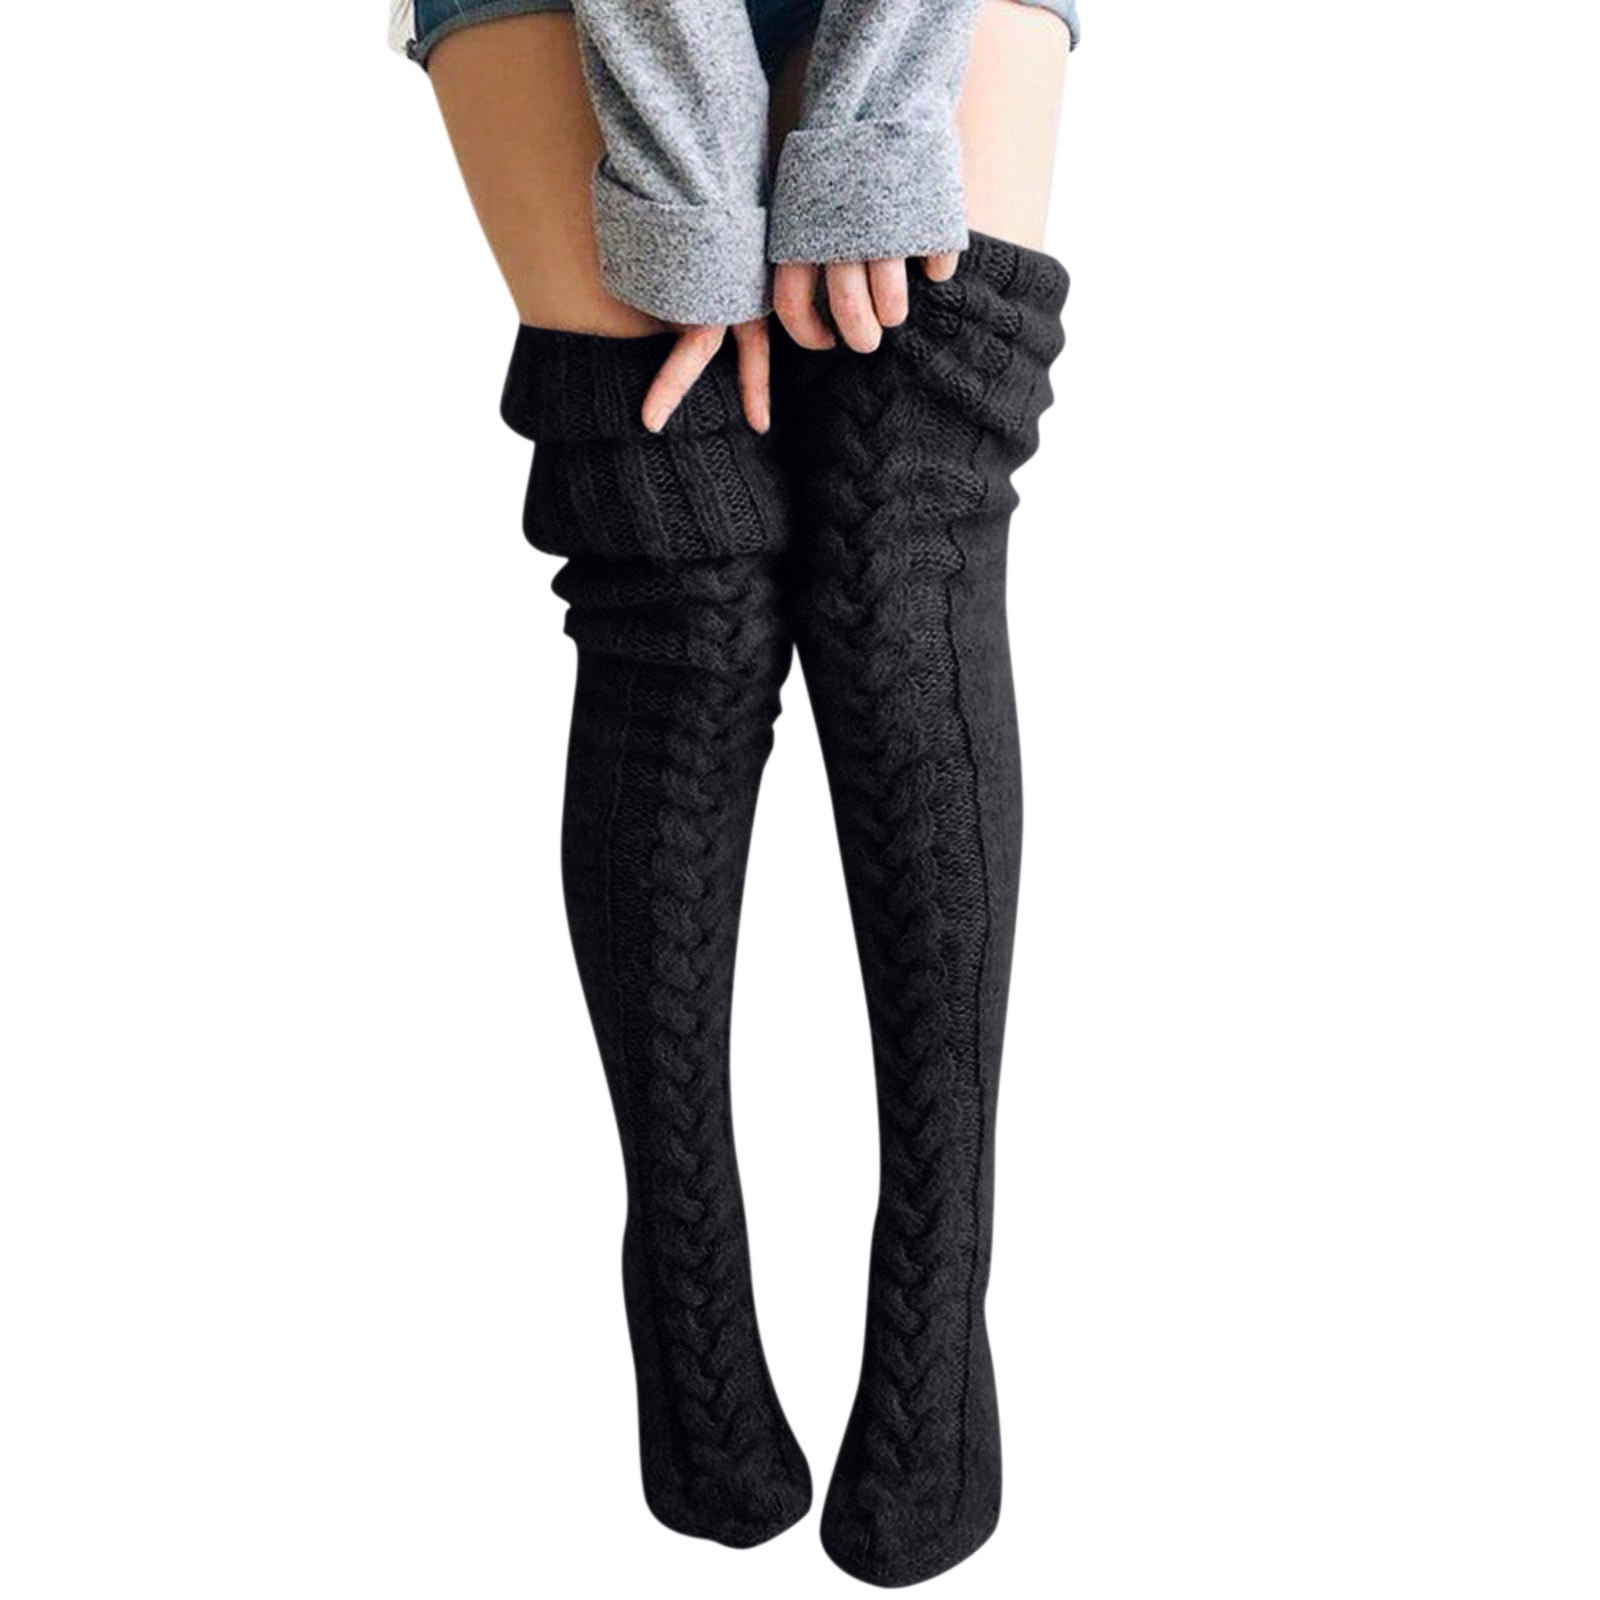 ZMHEGW Women Socks Knit Leg Stocking Thigh Long Warmers Knee Cable Boot ...